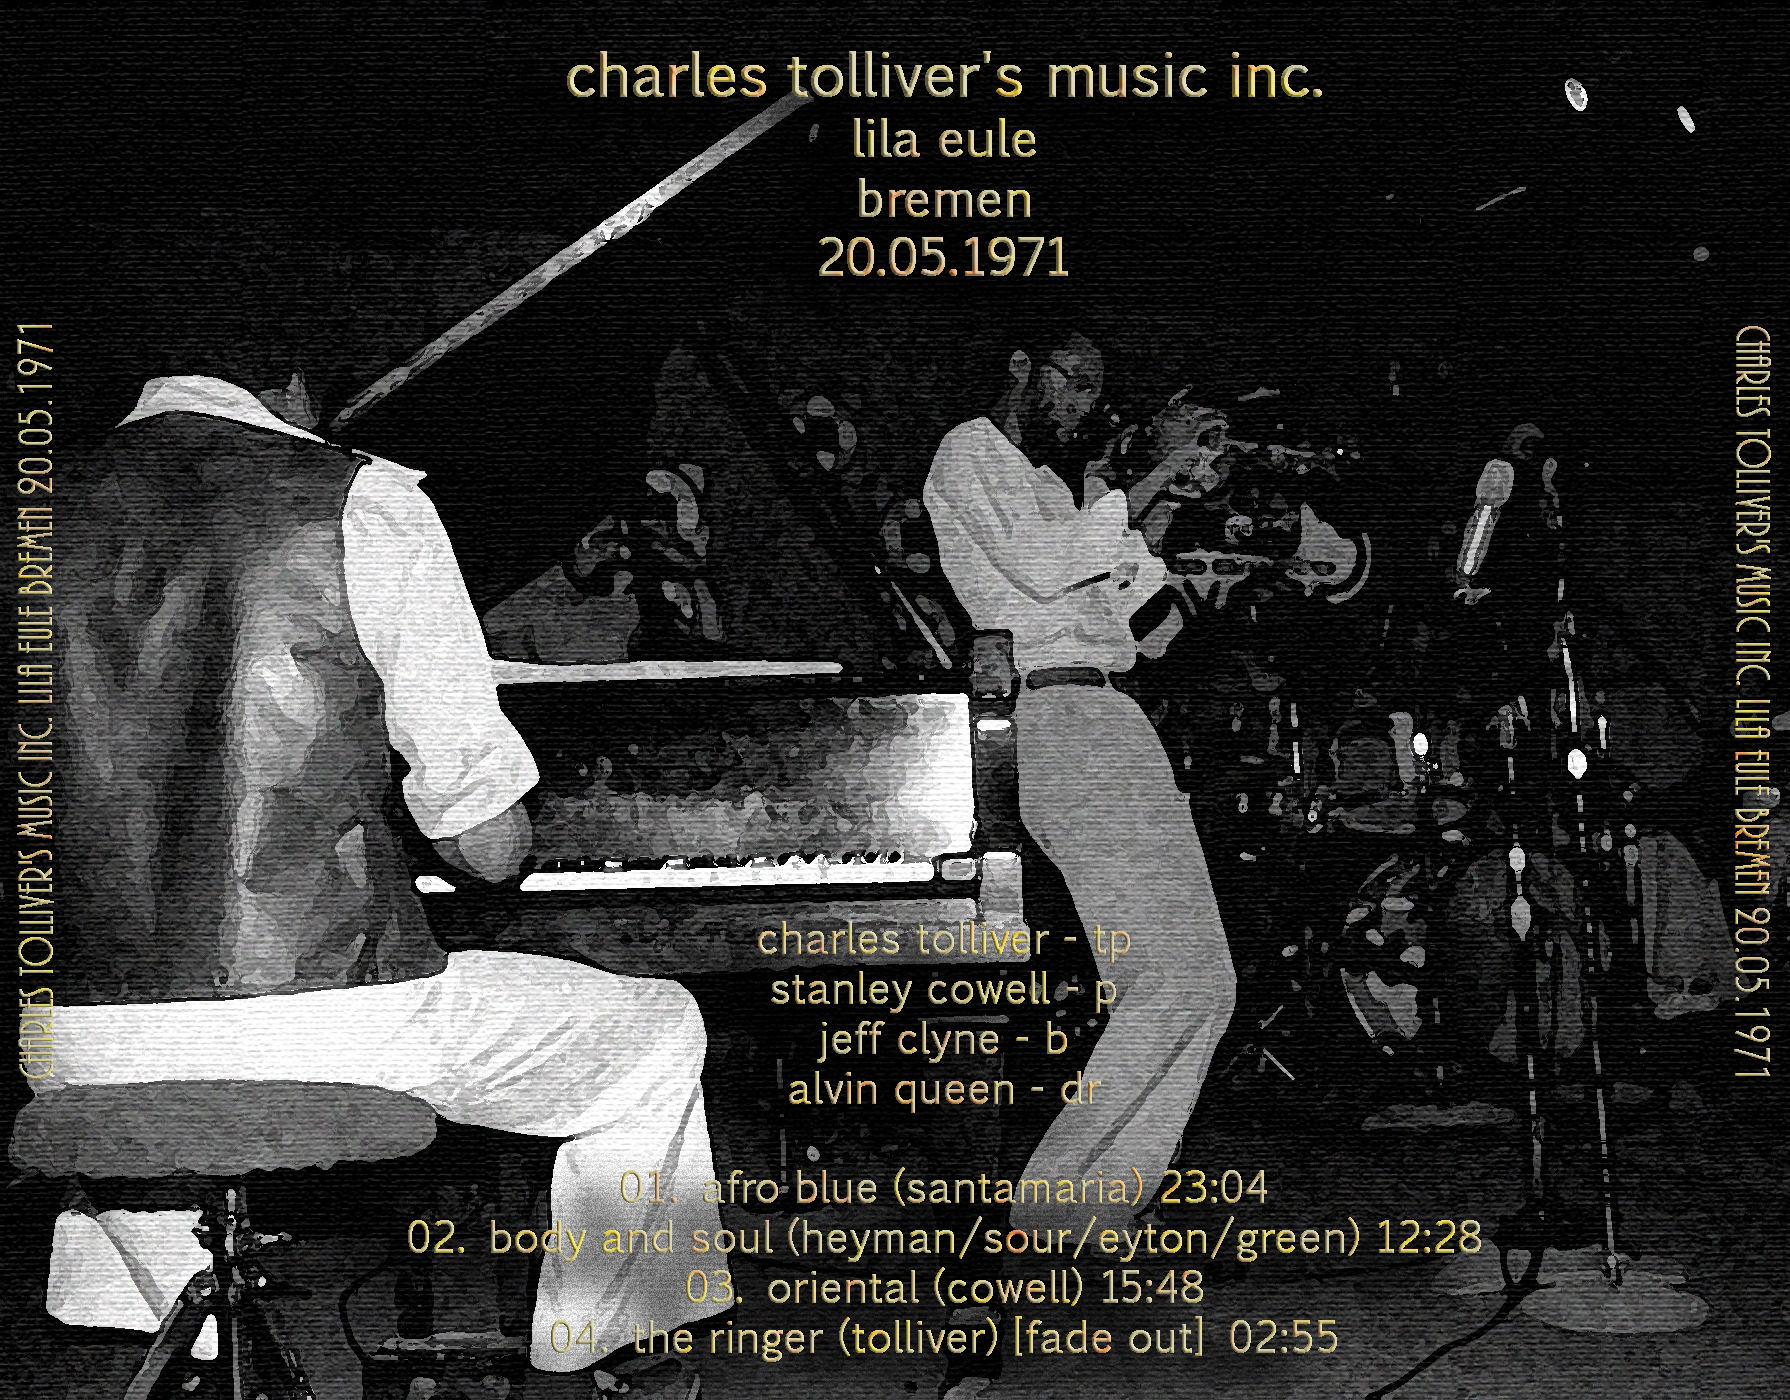 CharlesTolliversMusicInc1971-05-20LilaEuleBremenGermany (3).jpg